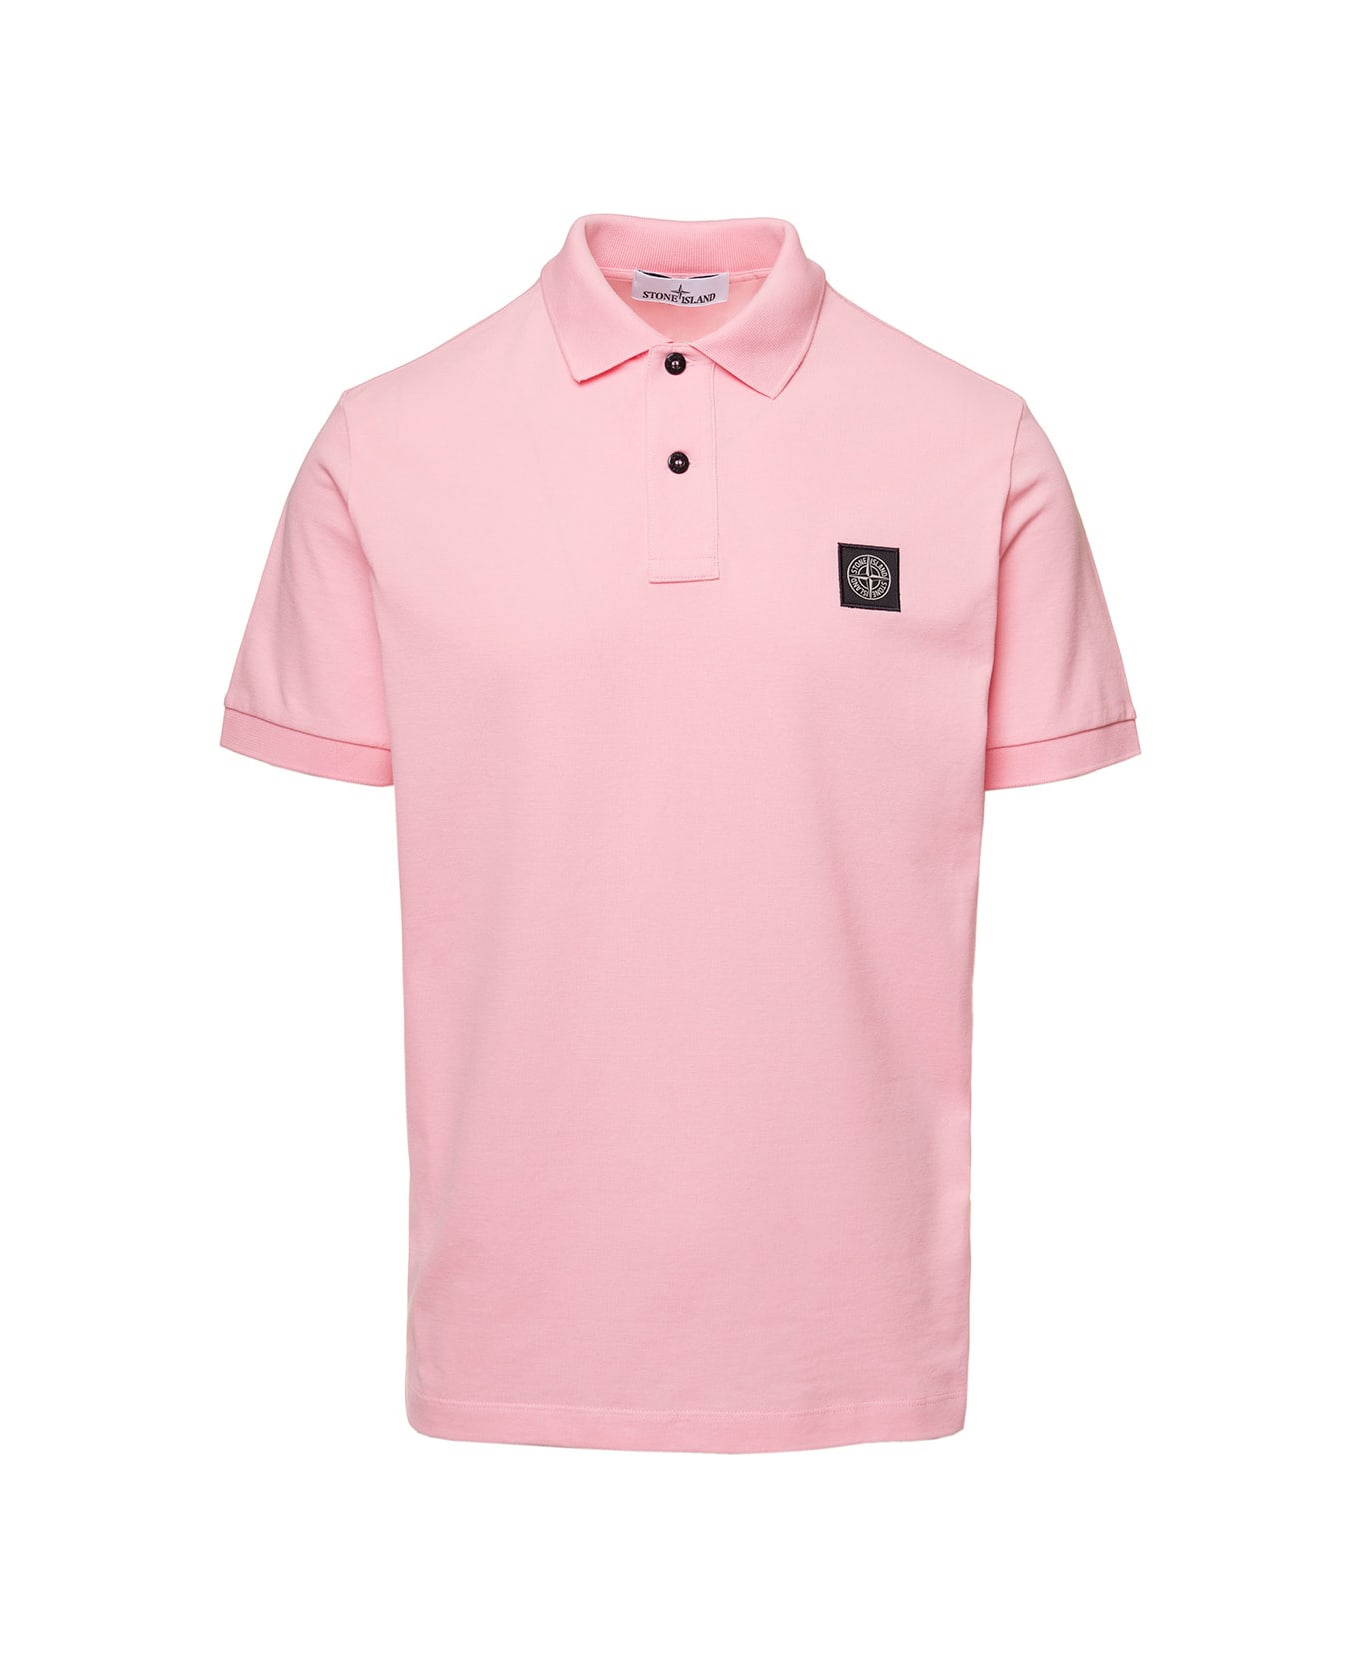 Stone Island Camisa Polo jersey Reta Lisa Branca Stone Island - Pink